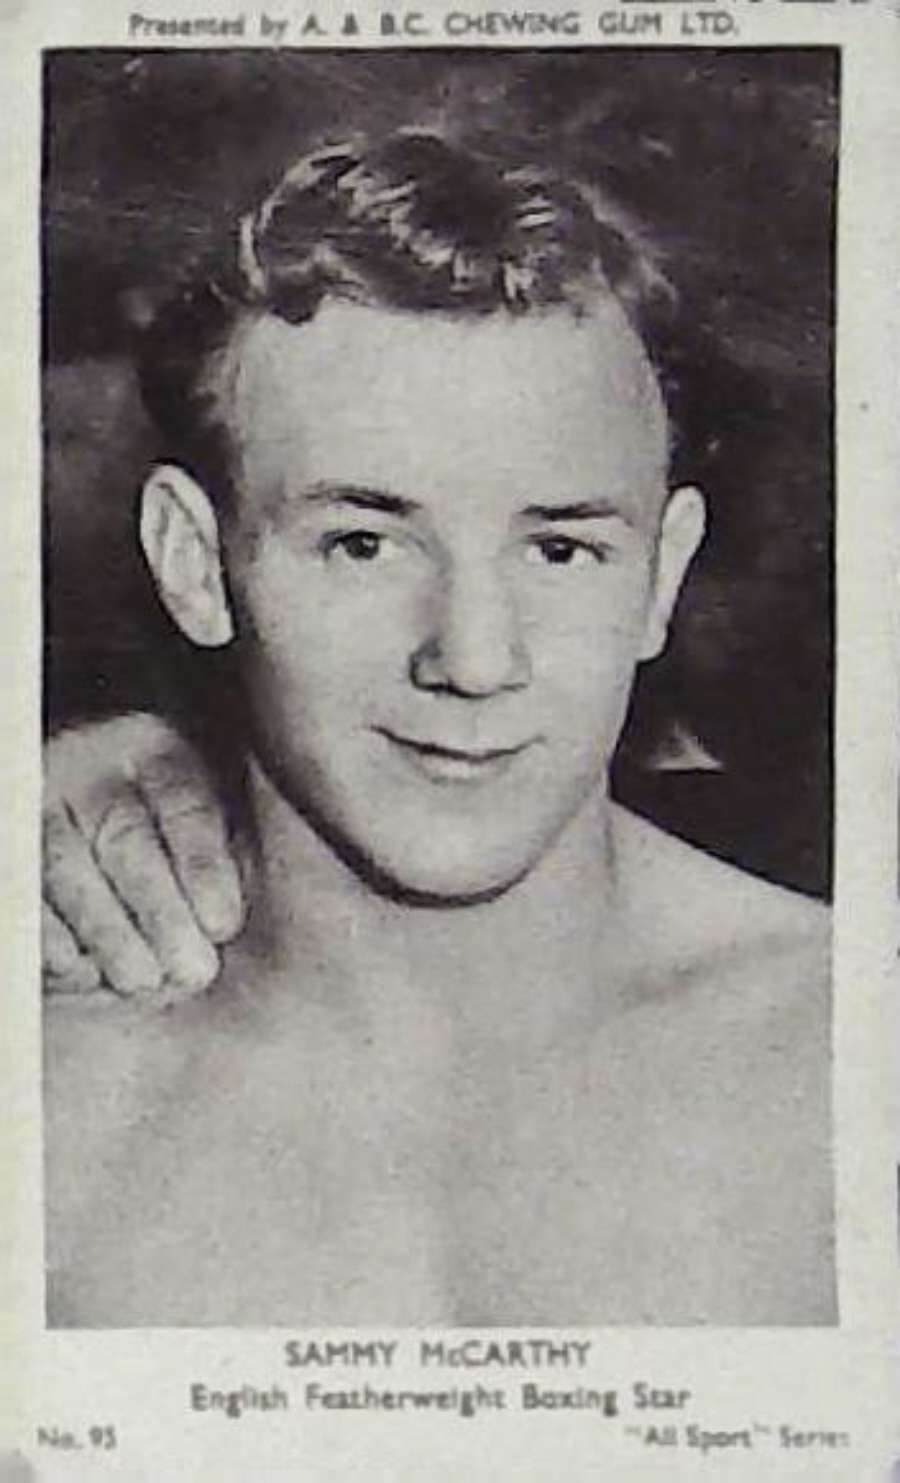 A & B C 1954 All Sports Boxing Sammy McCarthy Featherweight No 95